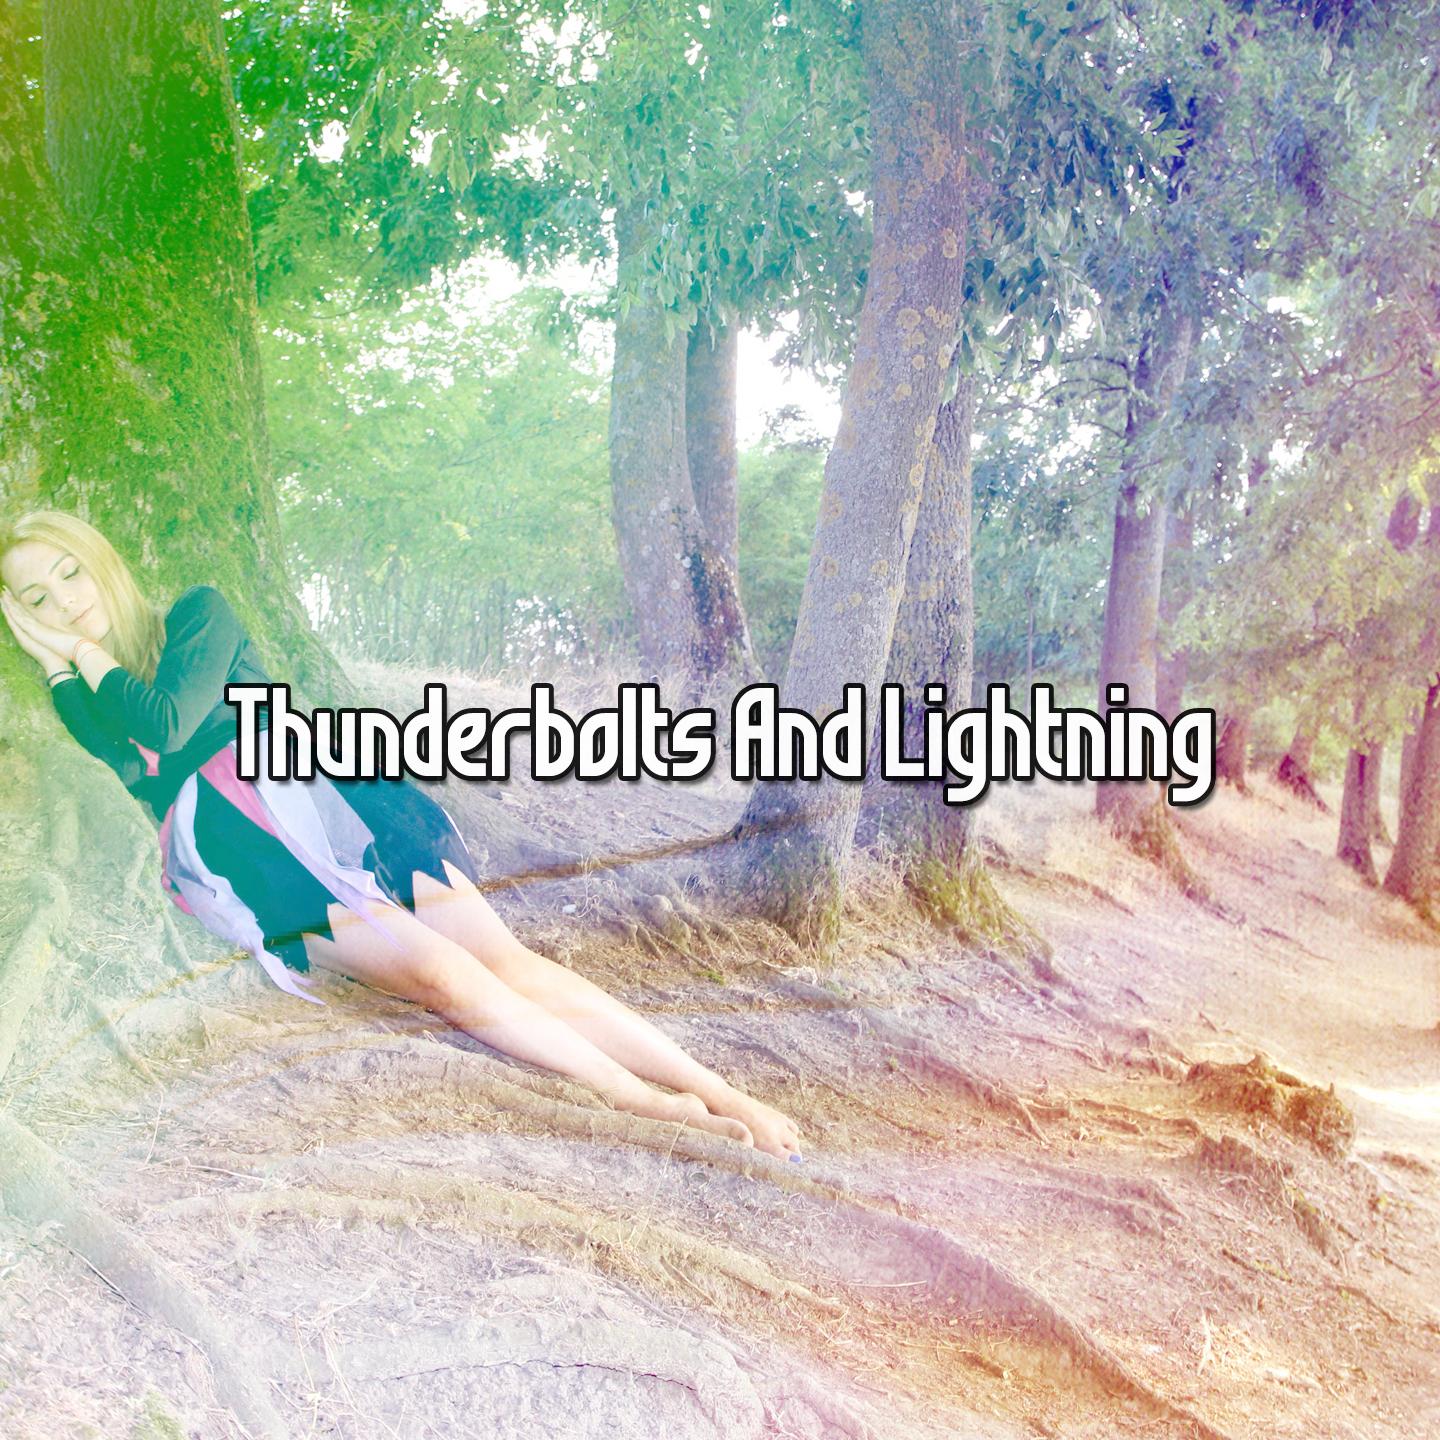 Thunderbolts And Lightning